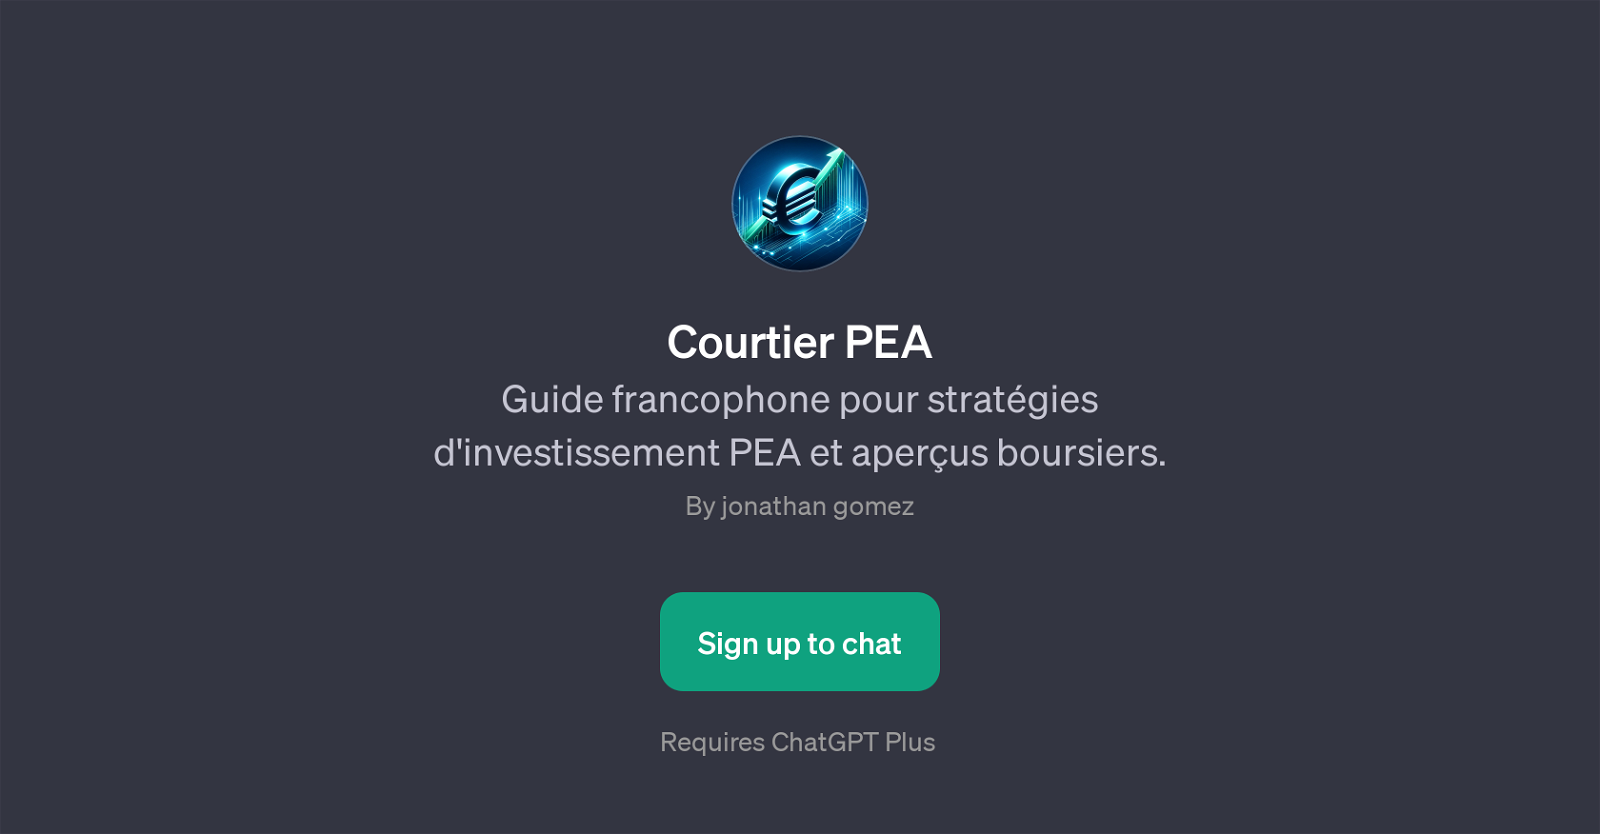 Courtier PEA website